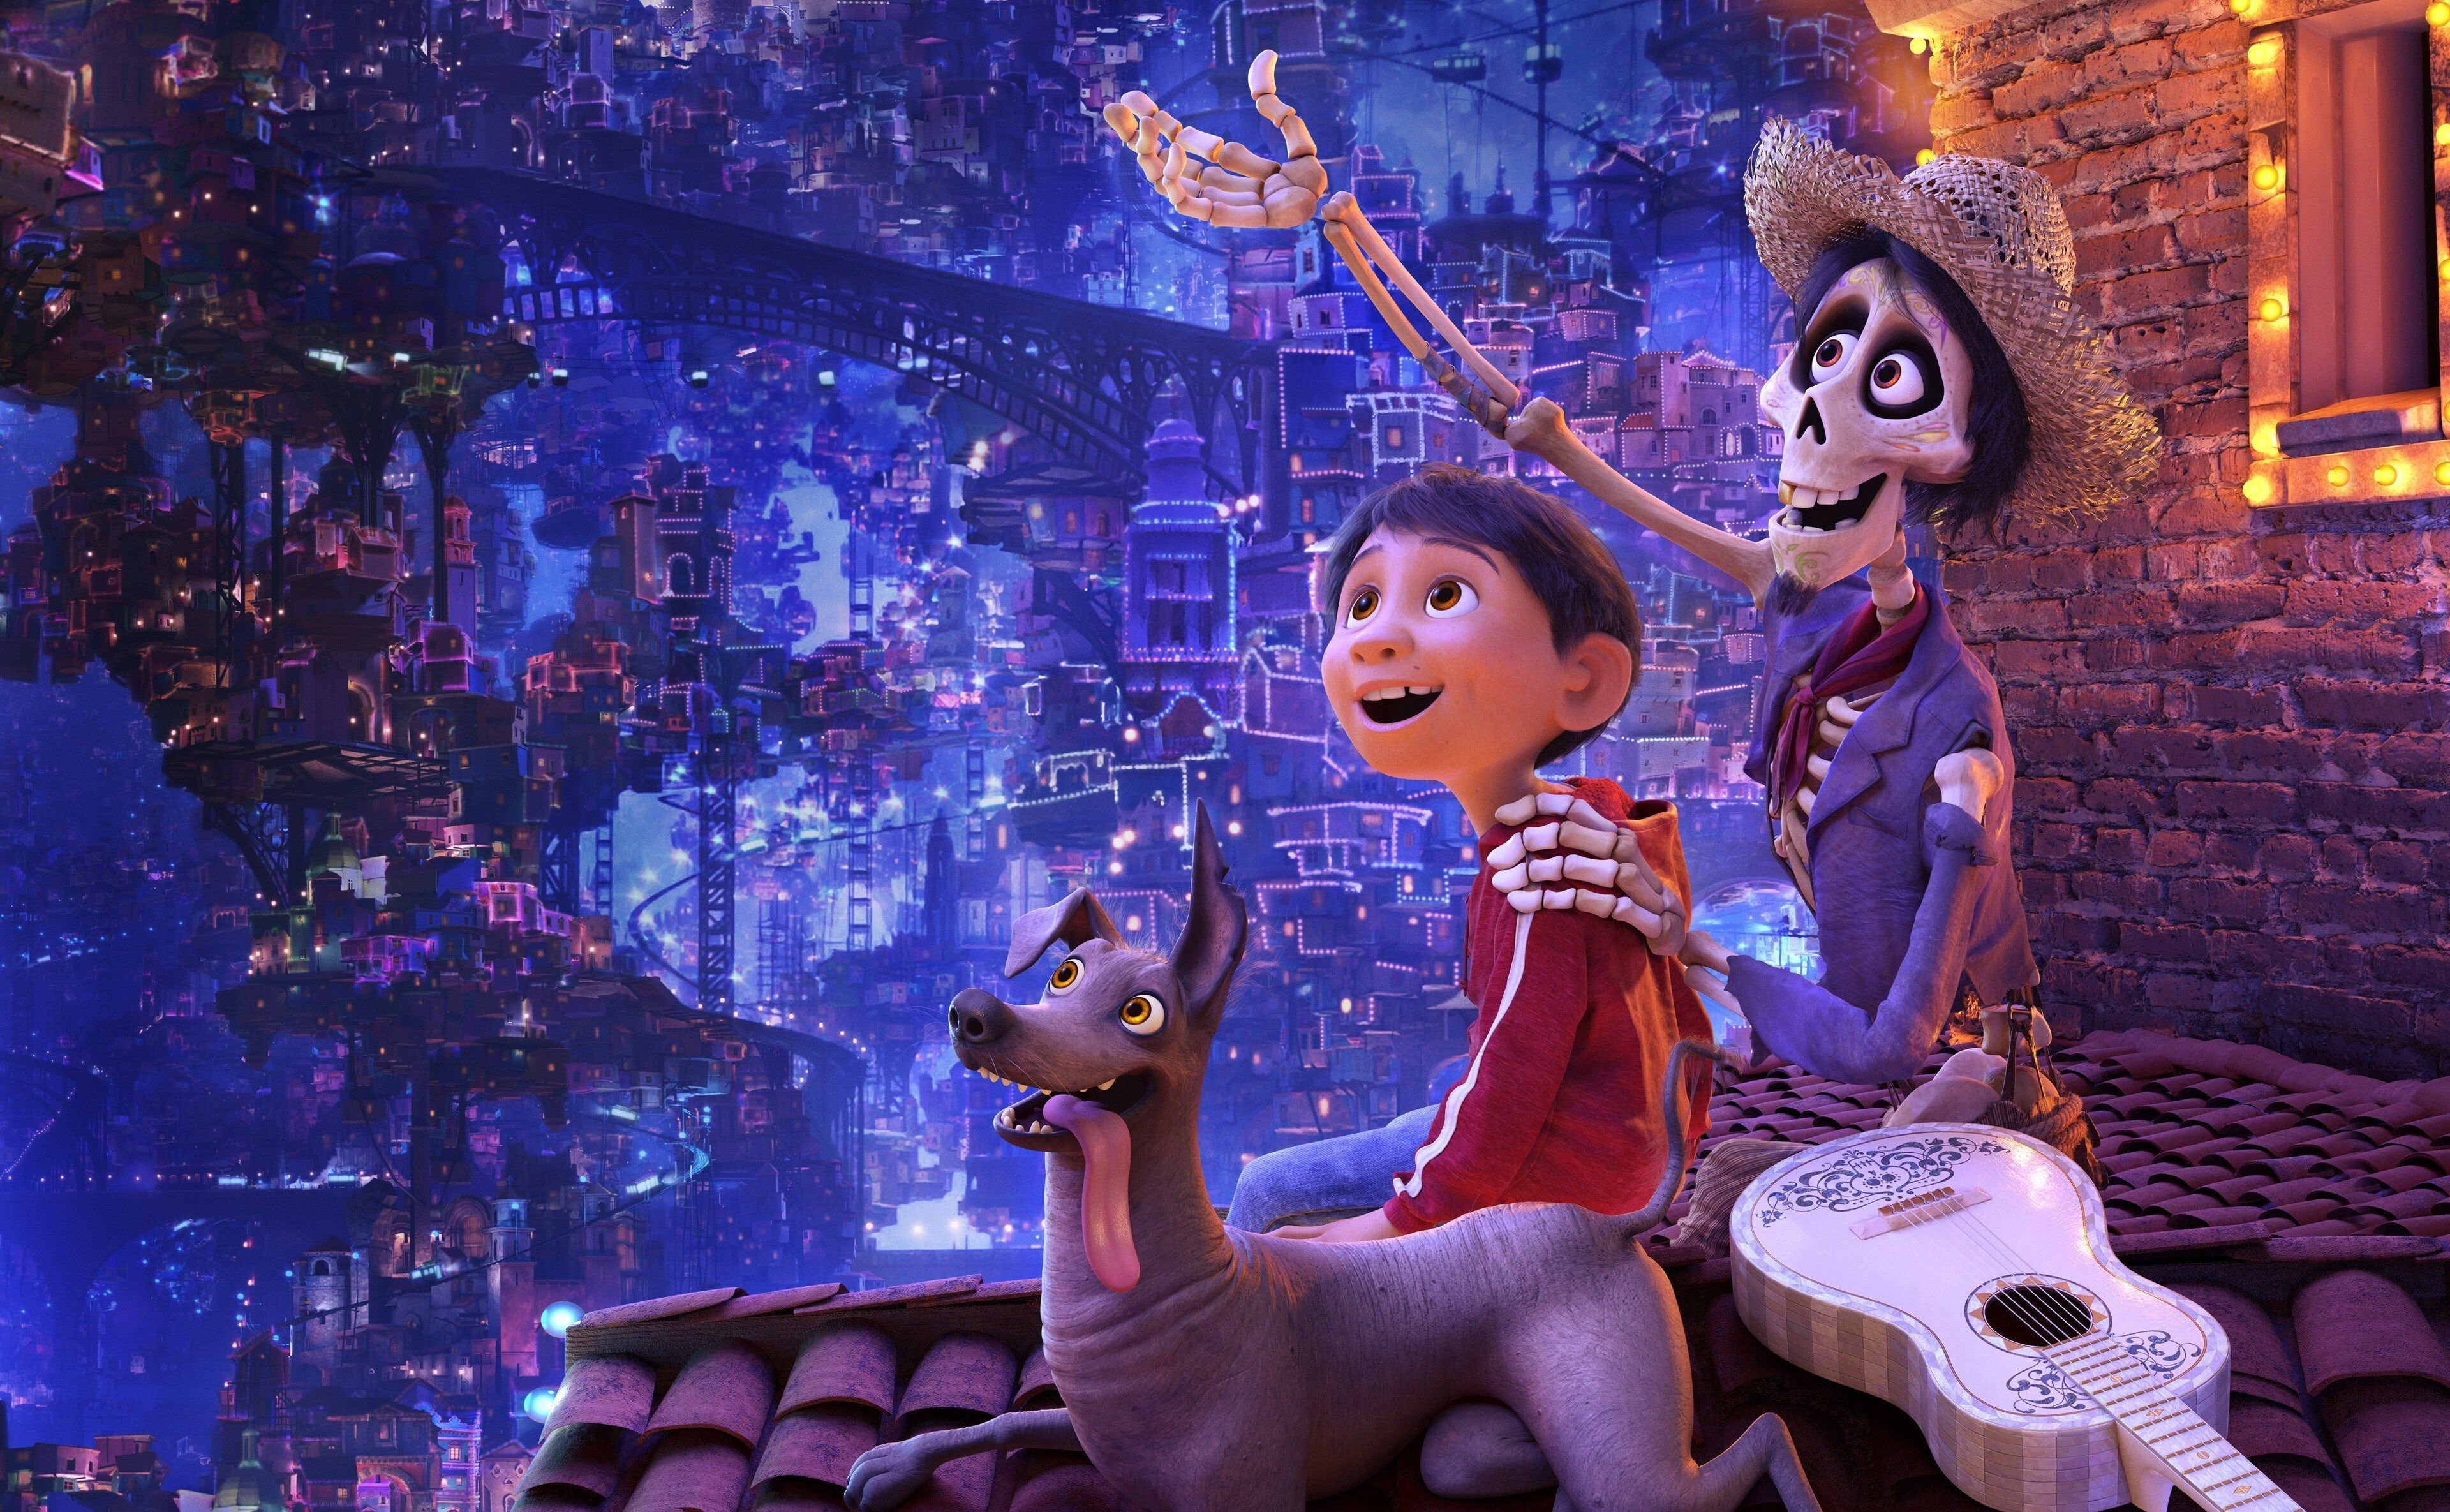 coco 4k free wallpaper downloads for pc. Animated movies, Disney fan art, Disney